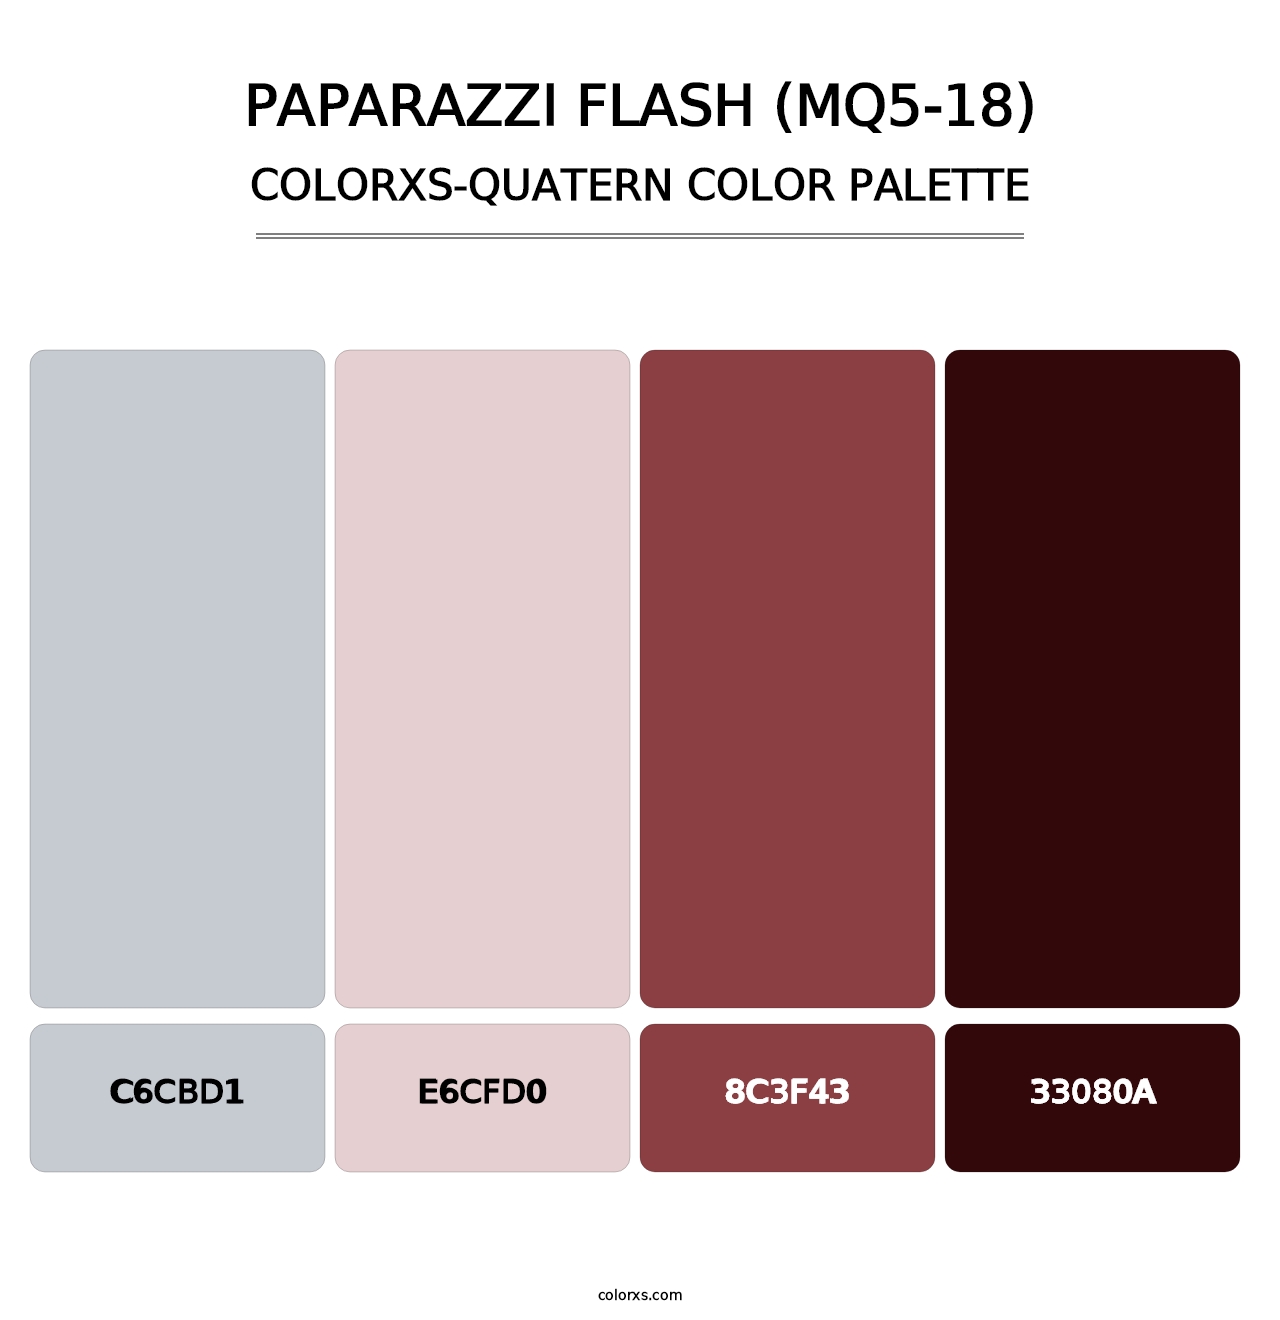 Paparazzi Flash (MQ5-18) - Colorxs Quatern Palette